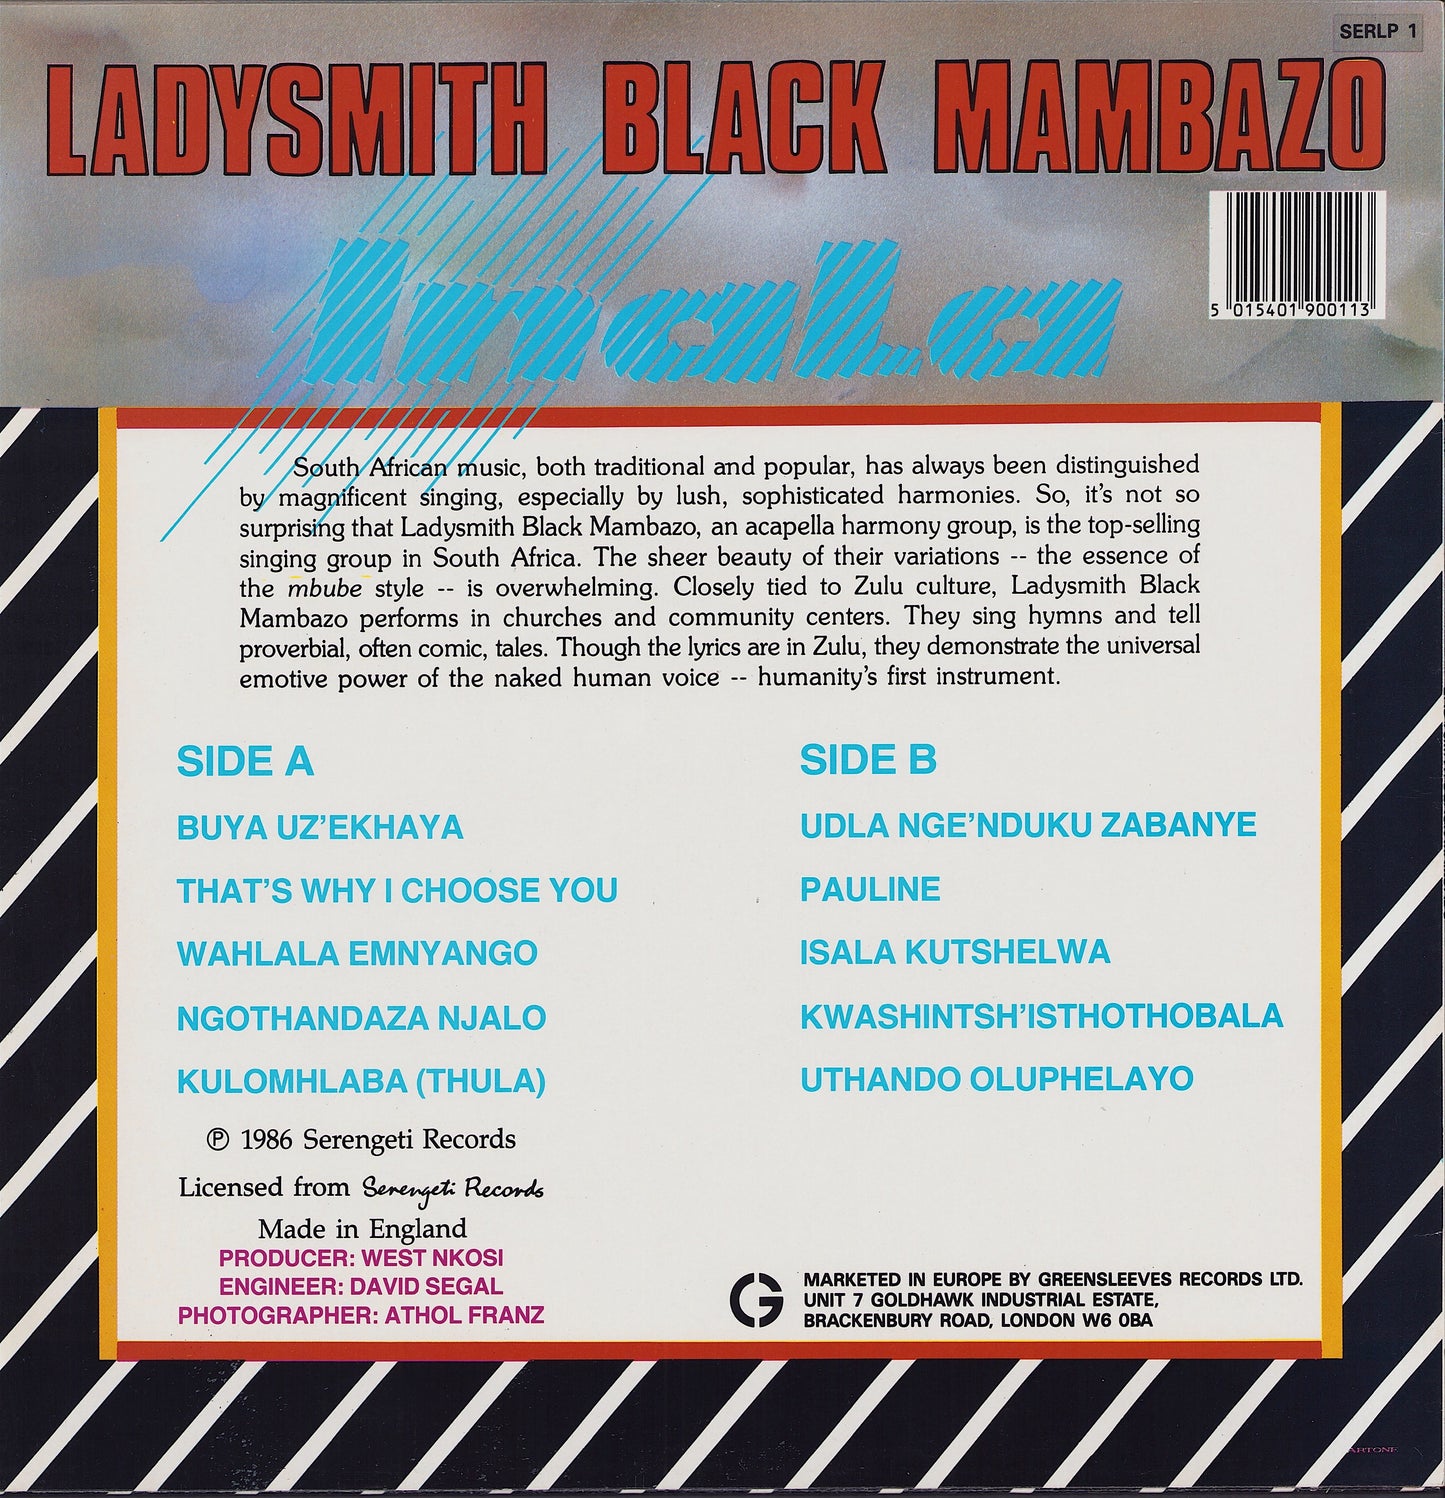 Ladysmith Black Mambazo ‎- Inala Vinyl LP